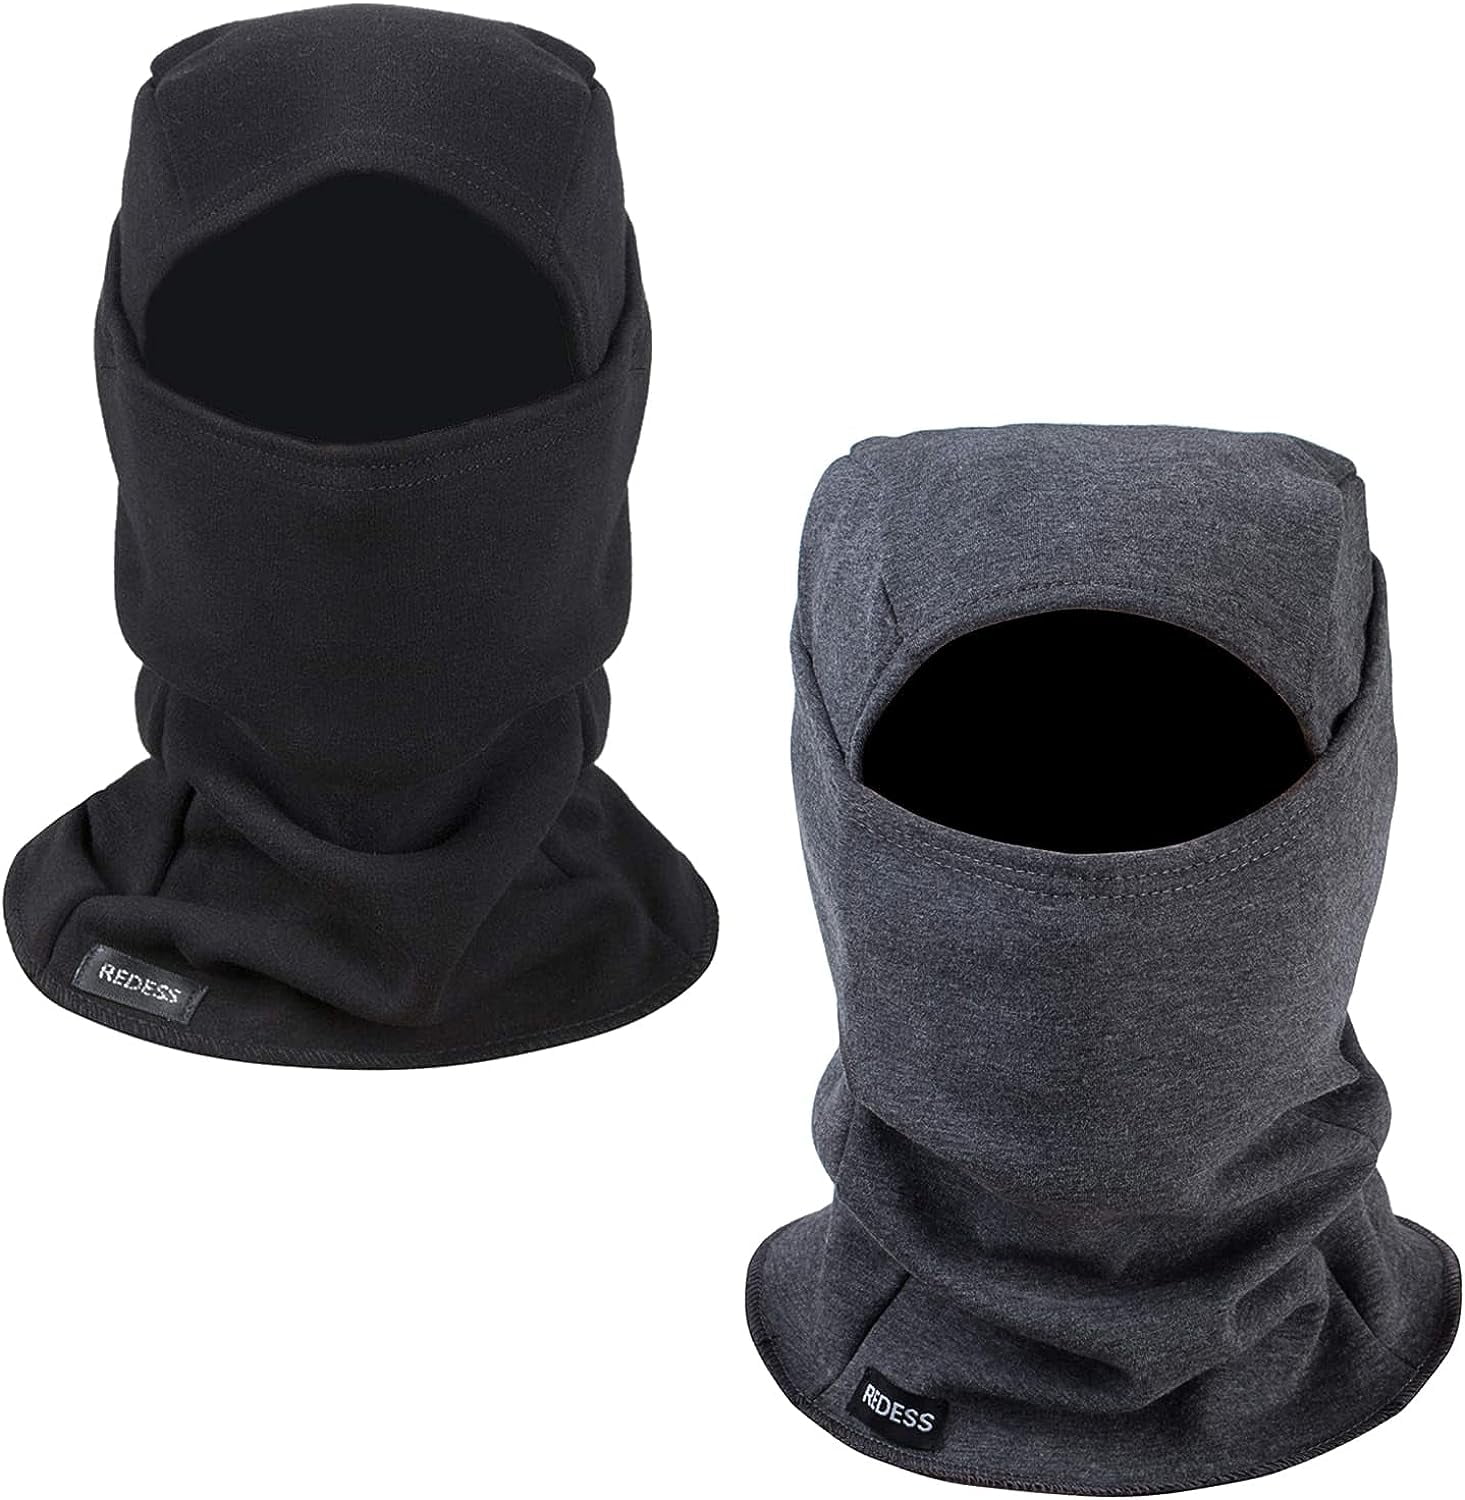 REDESS Balaclava Face Mask for Men/Women,Warm Fleece Windproof Ski Mask ...